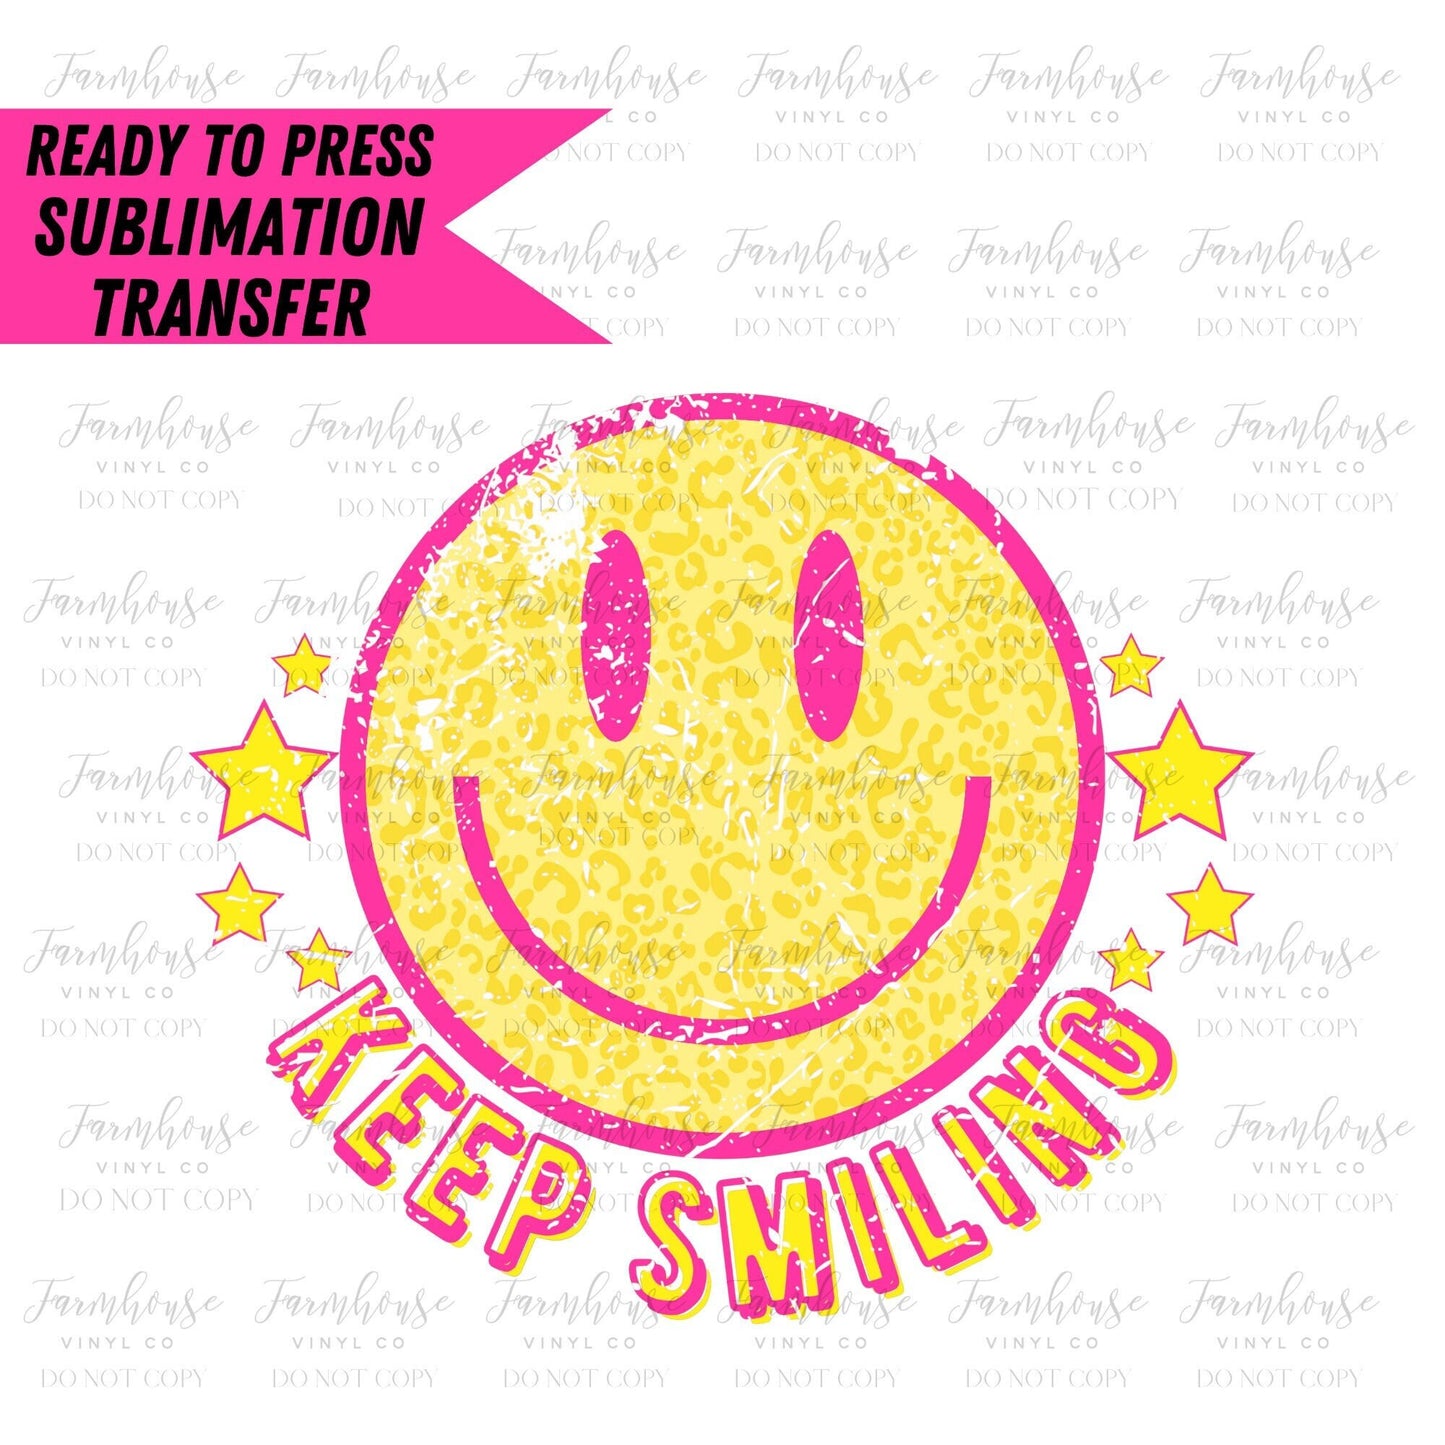 Keep Smiling Neon Smile Face, Ready to Press Sublimation Transfer, Sublimation Transfers, Heat Transfer, Ready to Press, Retro Summer Design - Farmhouse Vinyl Co